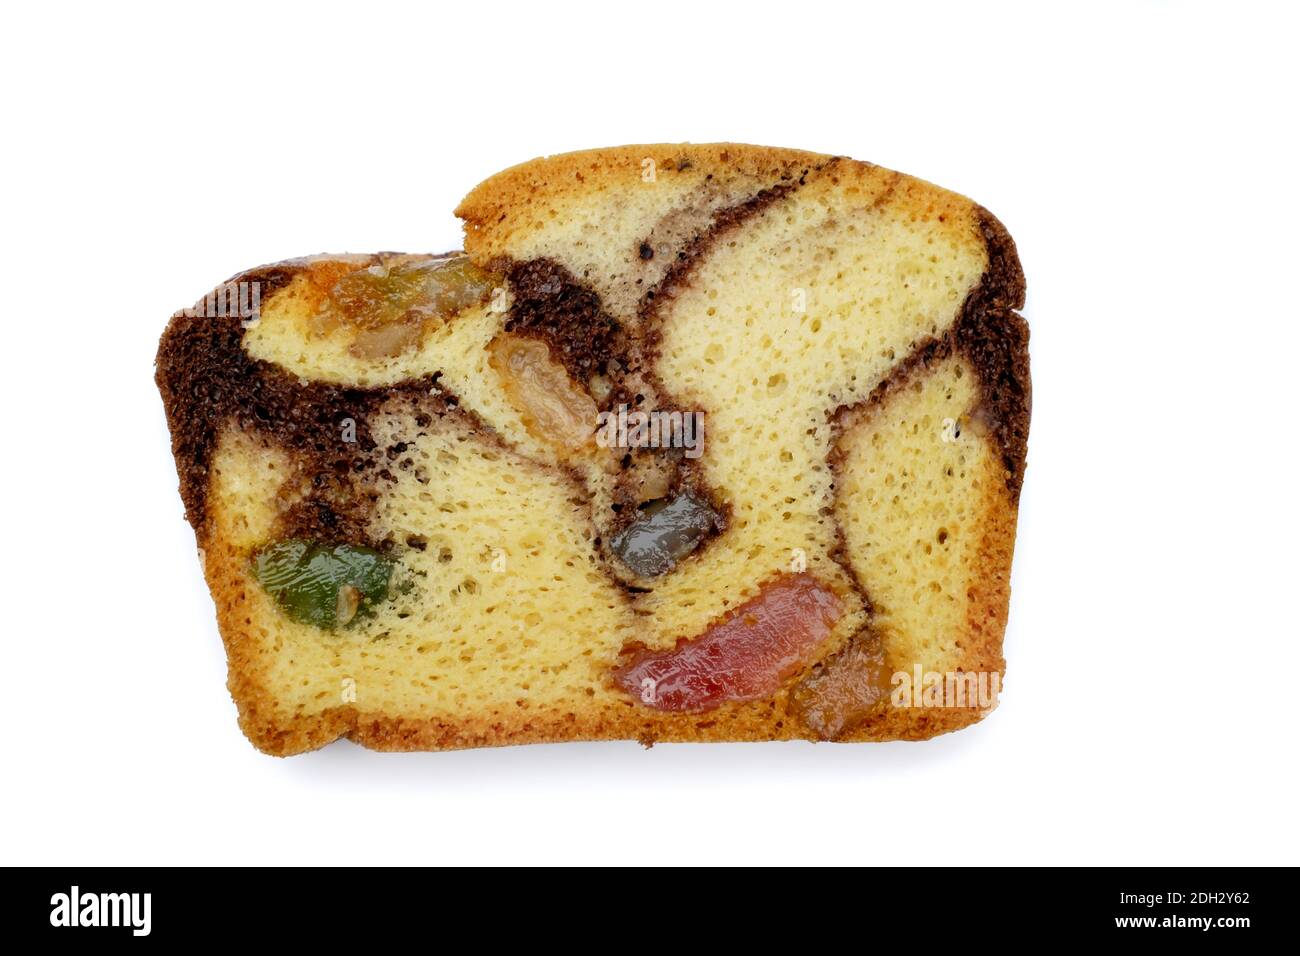 Slice of Romanian sponge cake with cocoa, turkish delight and raisins Stock Photo